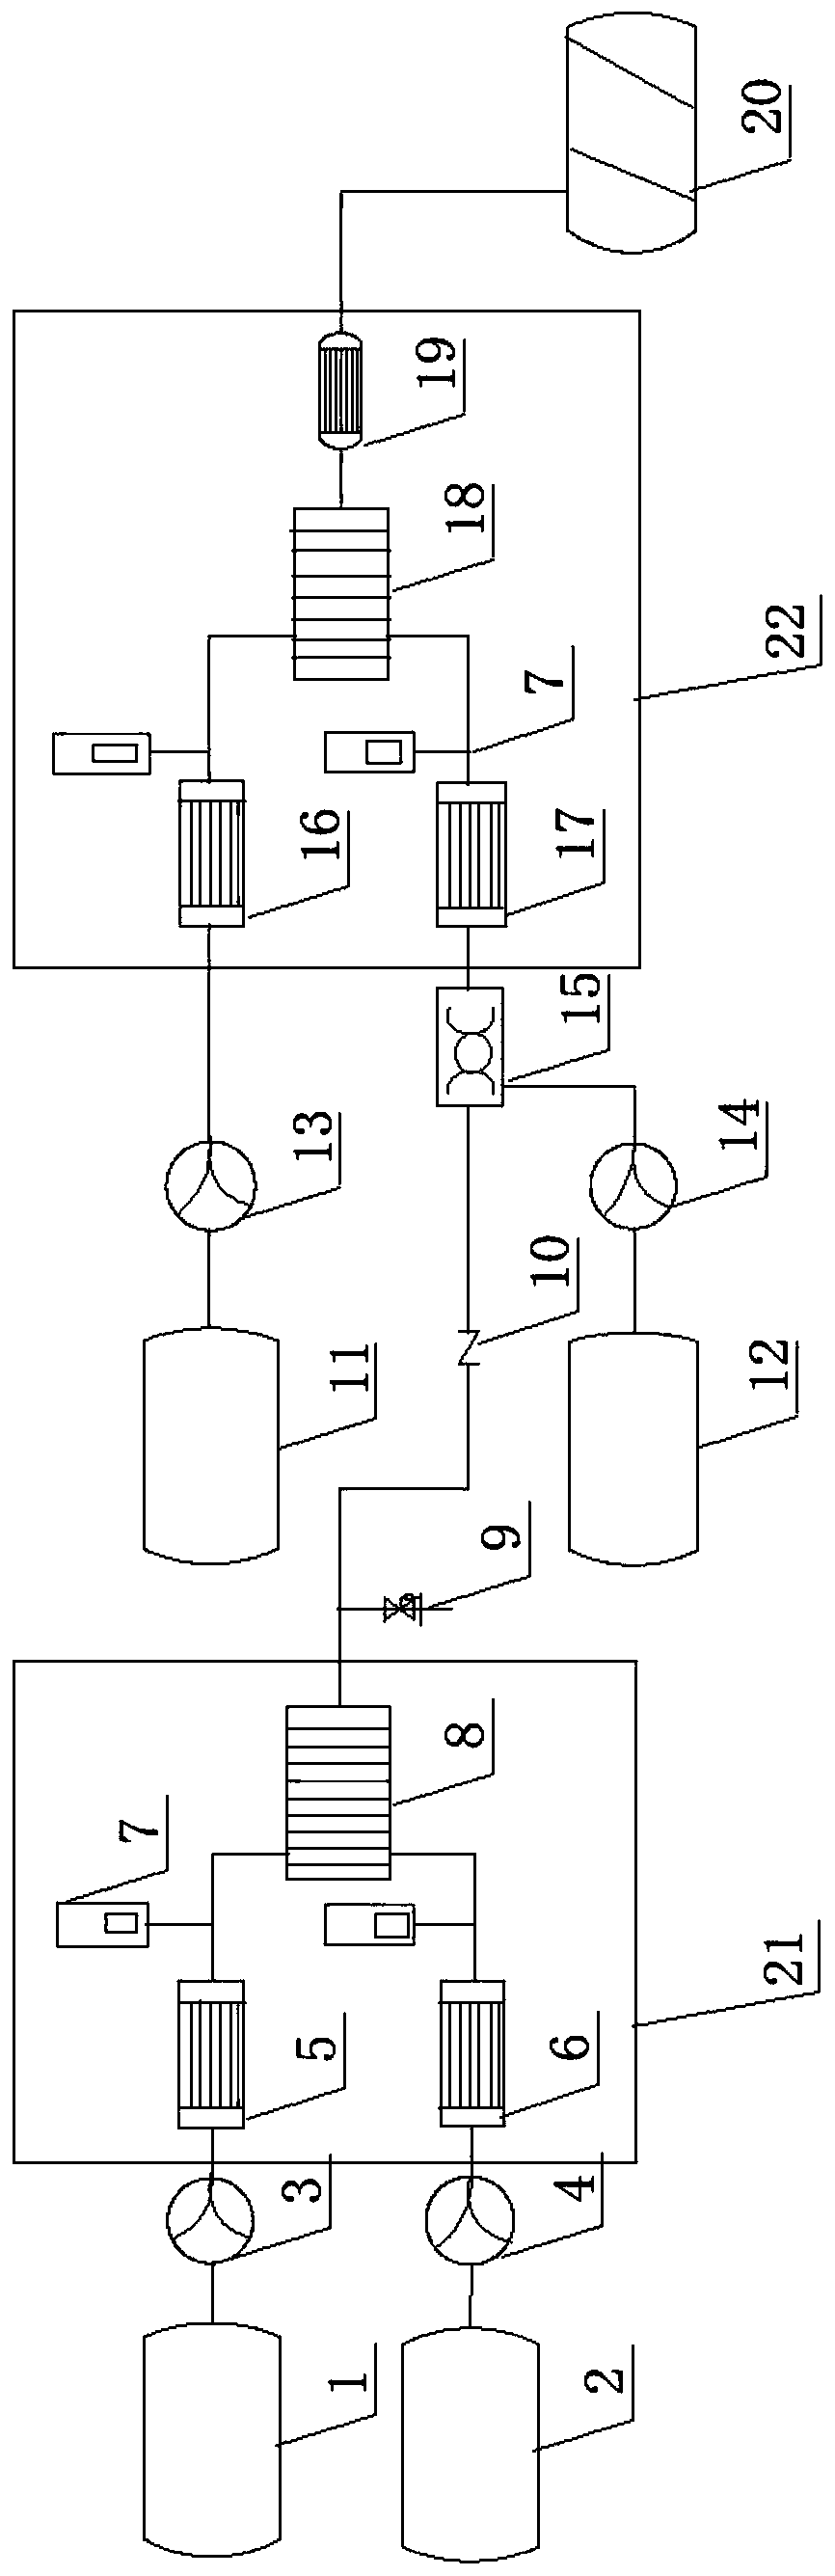 Method for preparing emamectin benzoate intermediate by microreactor